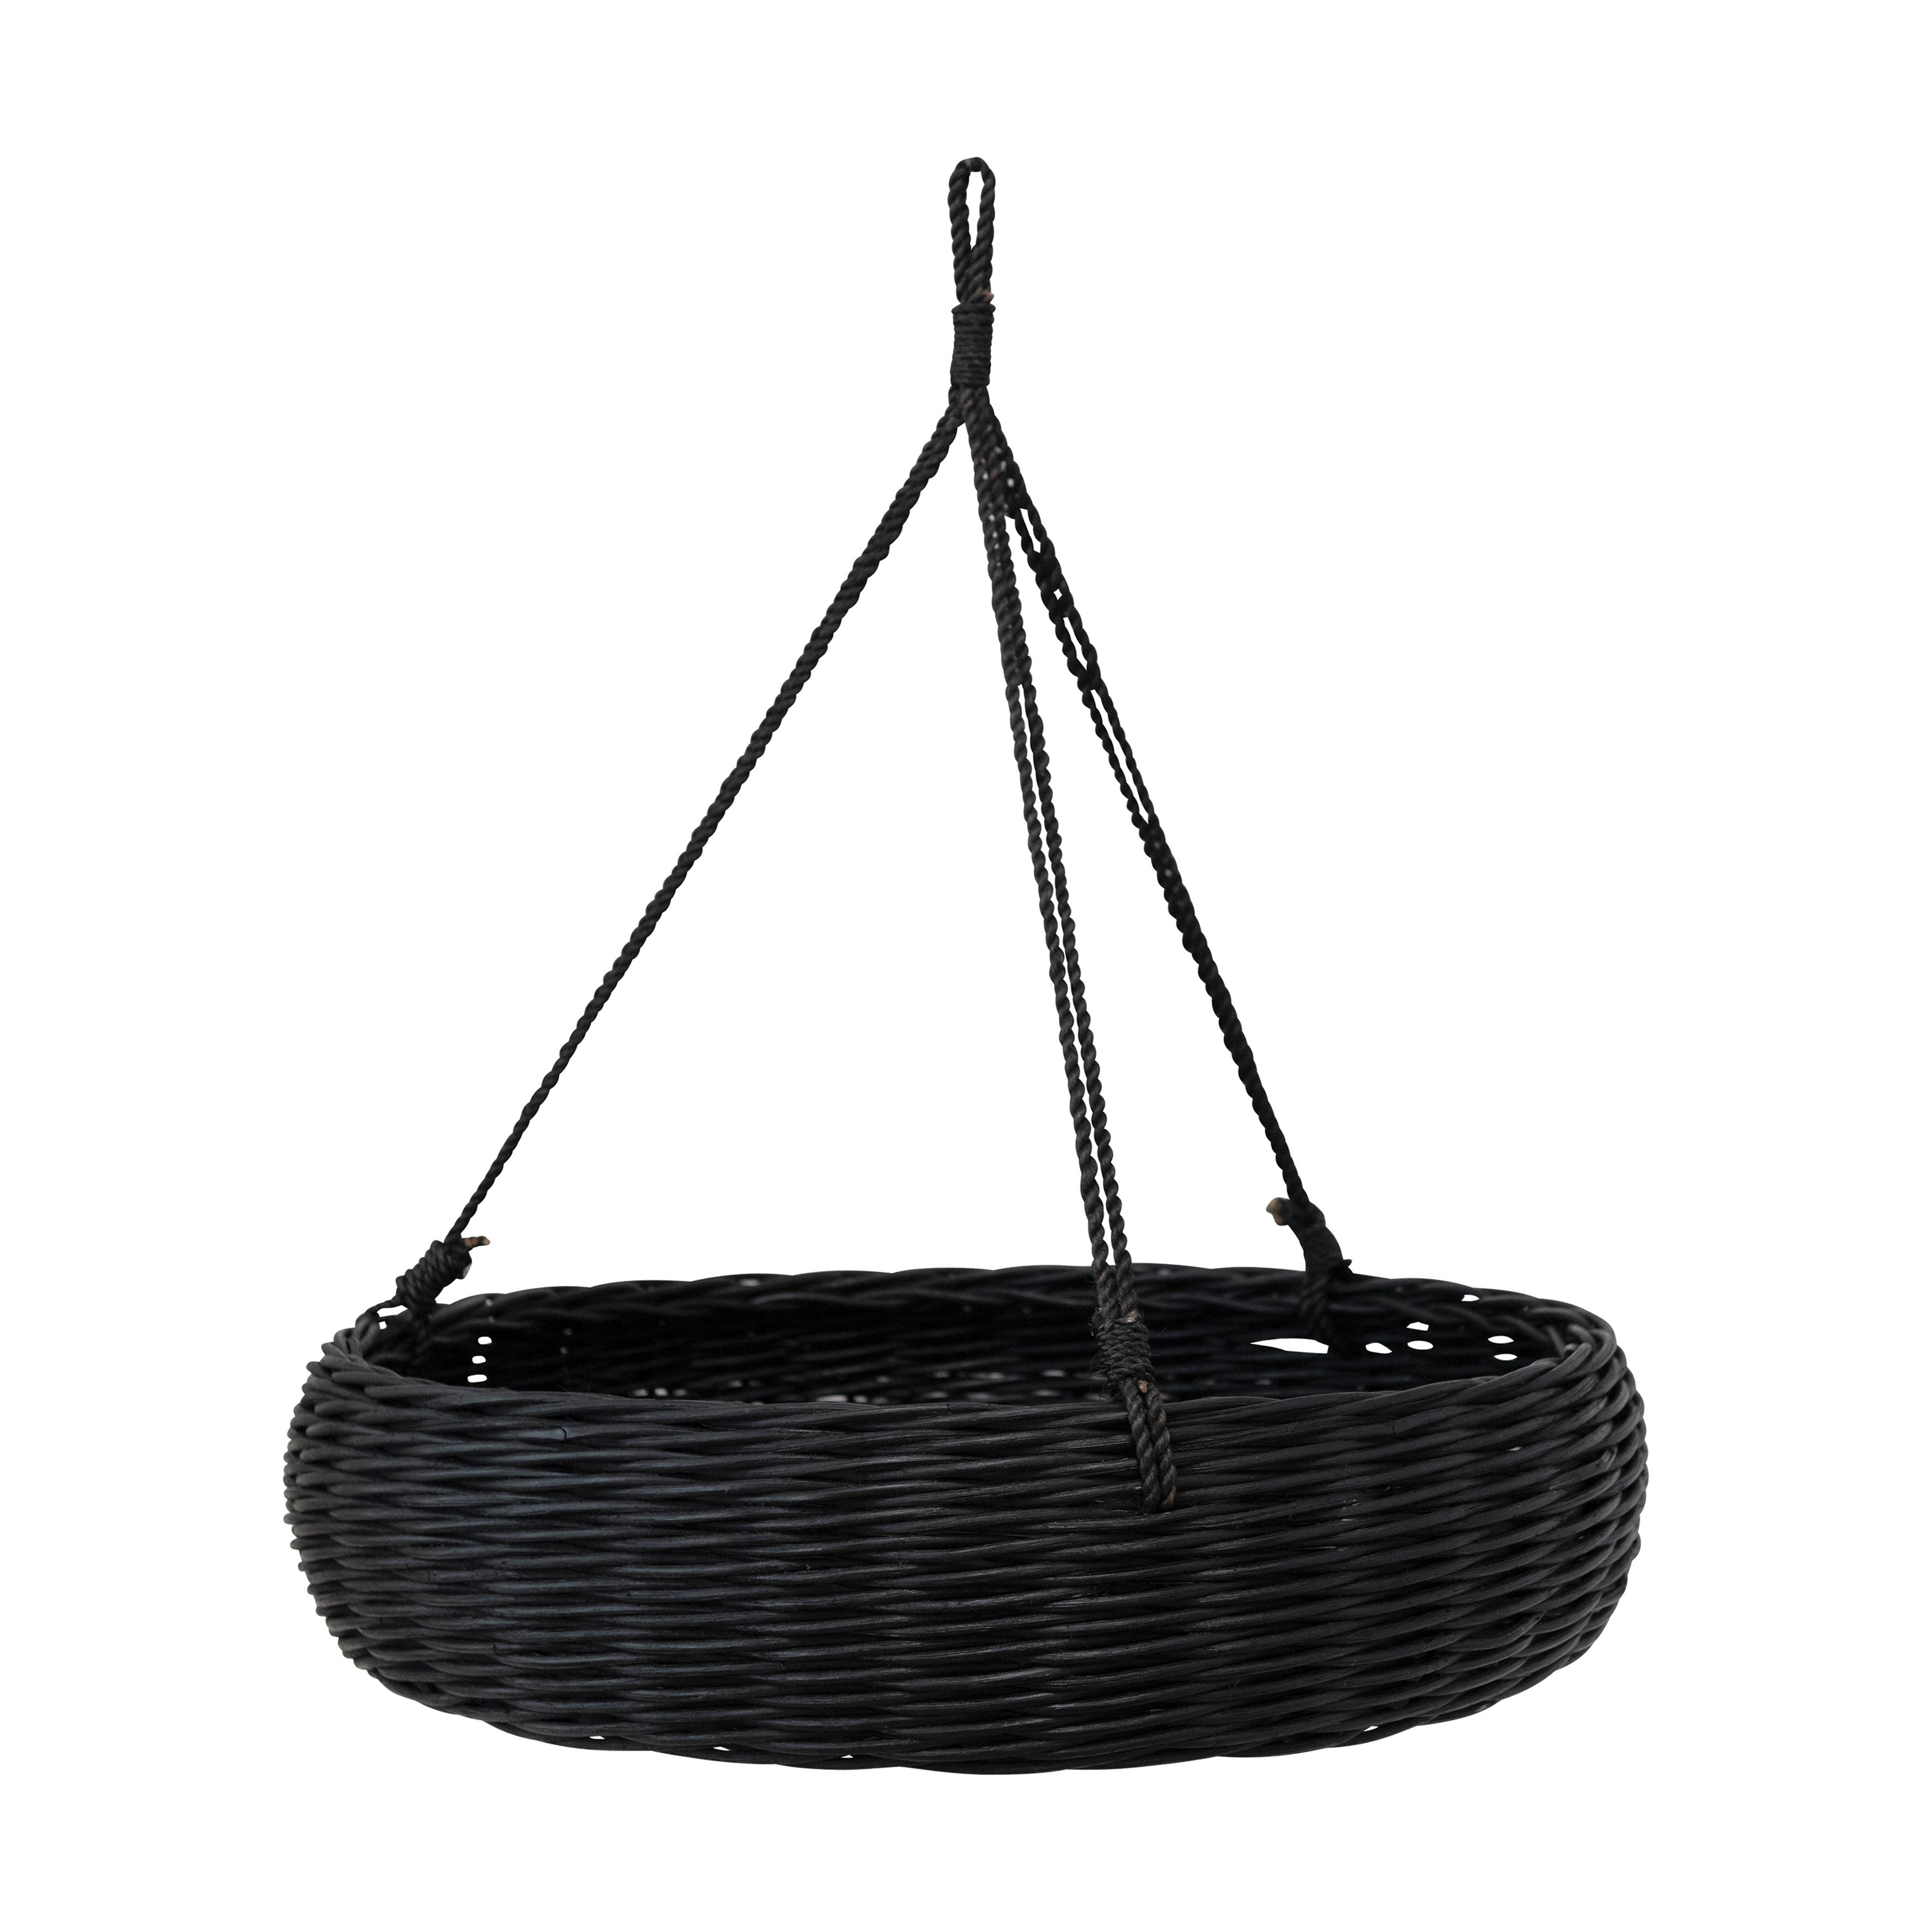 Hanging Hand-Woven Rattan Basket w/ Jute Rope Hanger